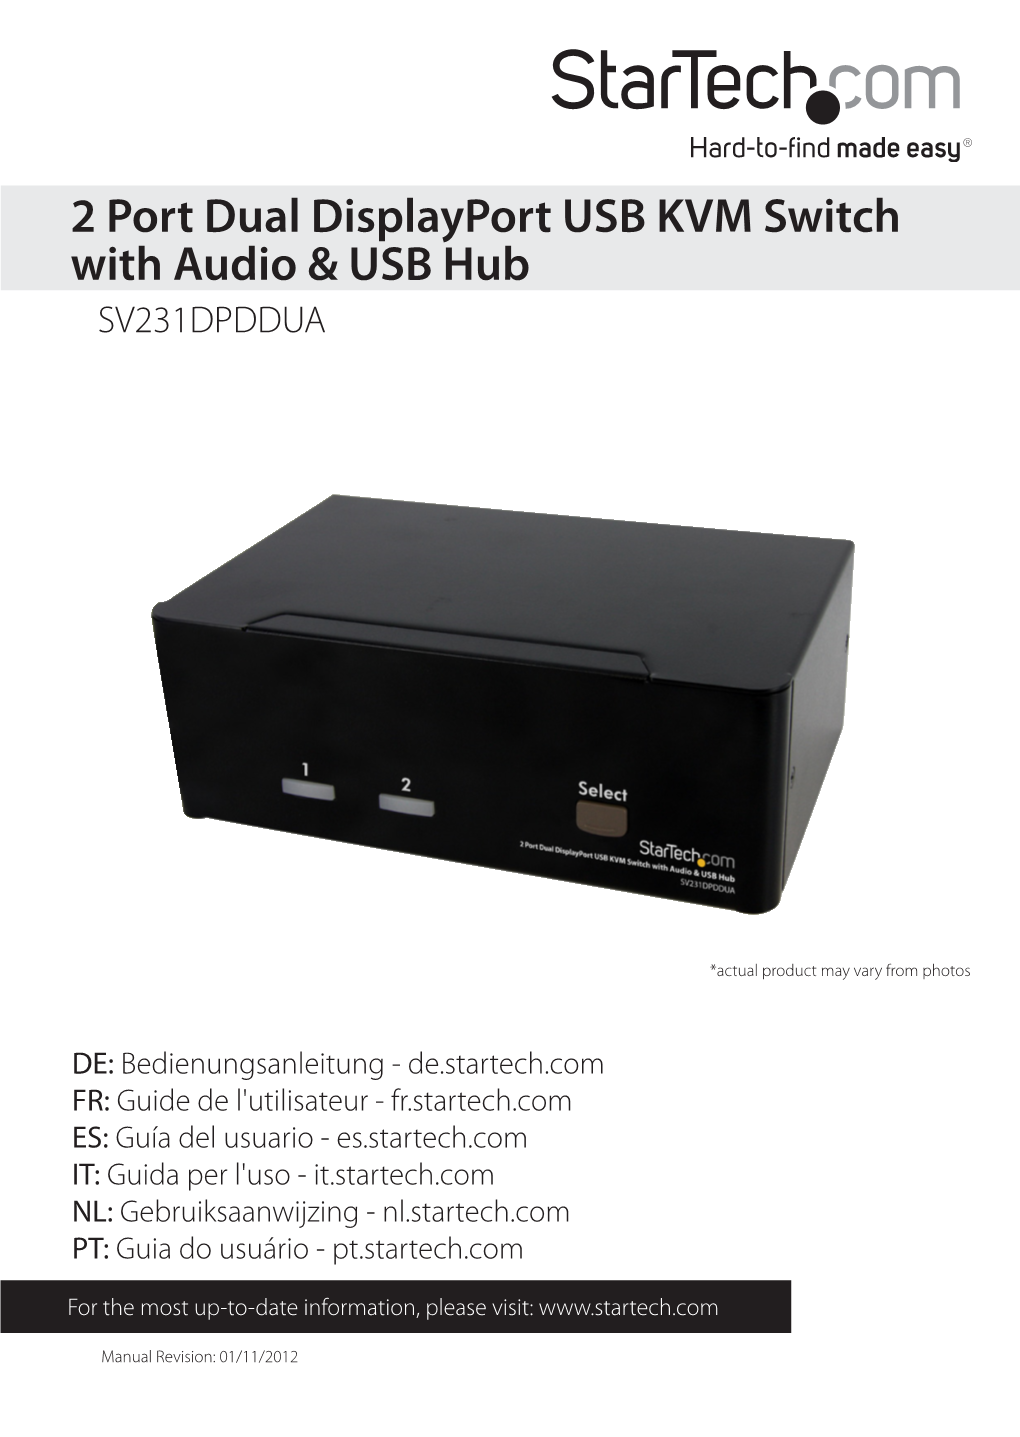 2 Port Dual Displayport USB KVM Switch with Audio & USB